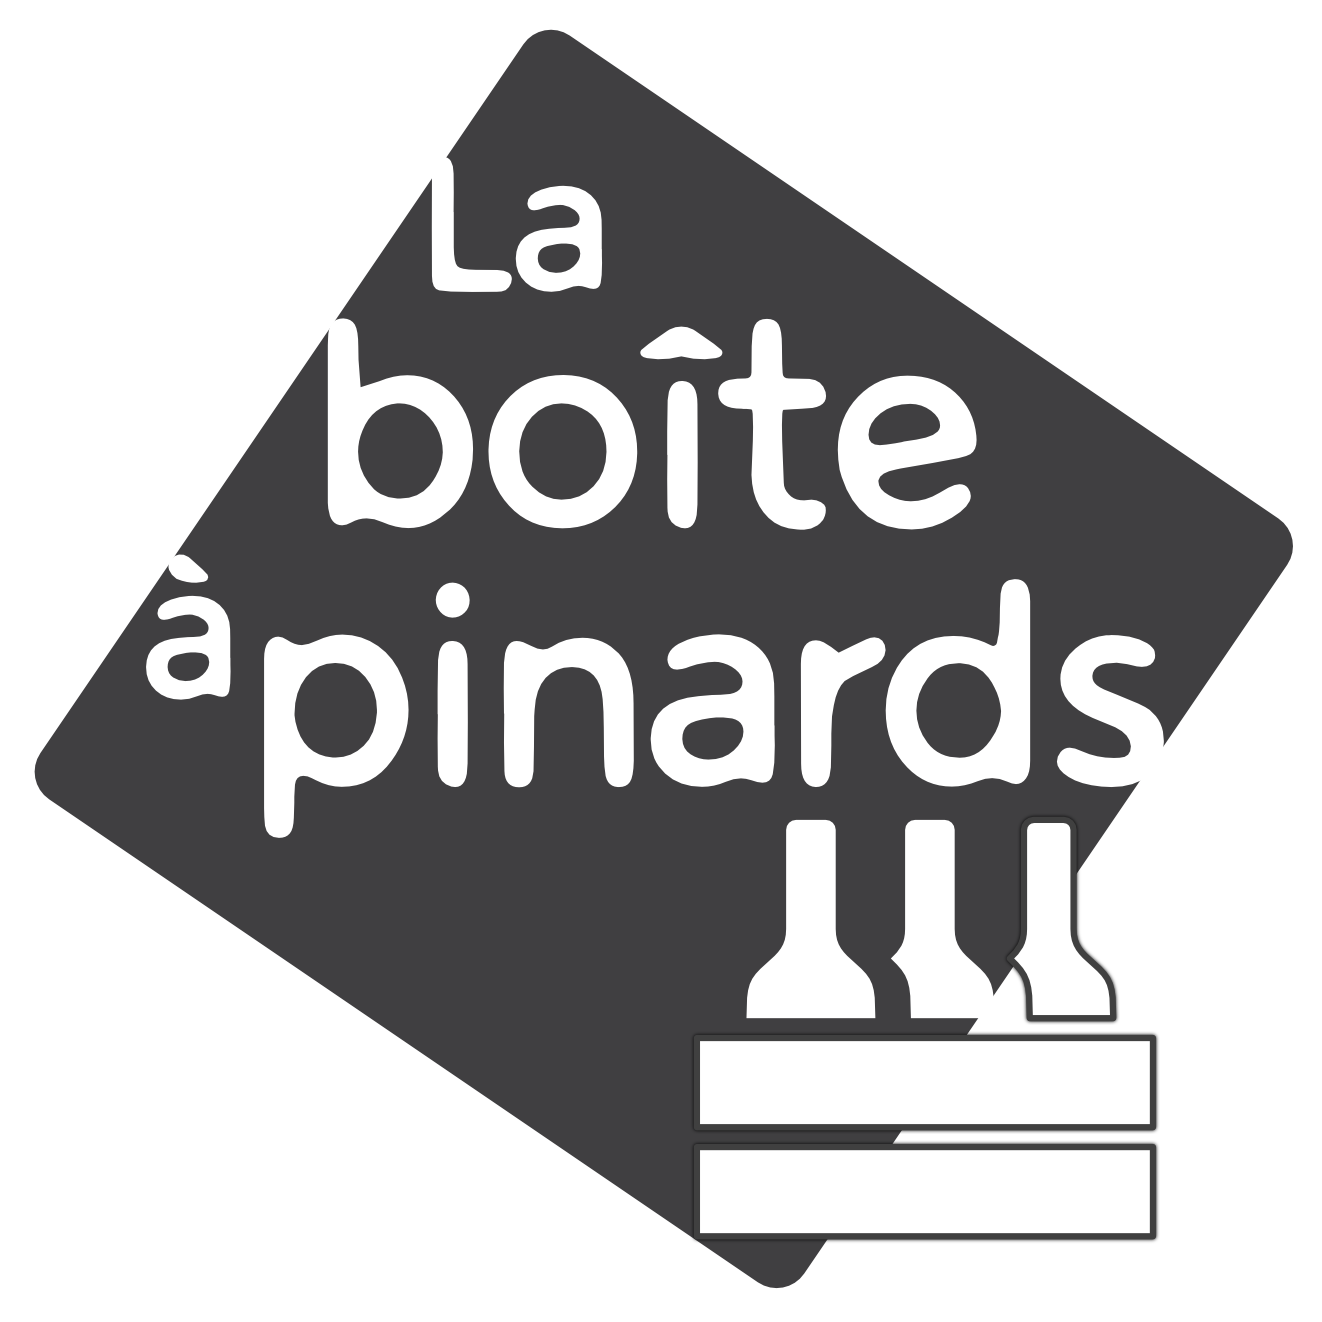 La-boite-a-pinards-logo